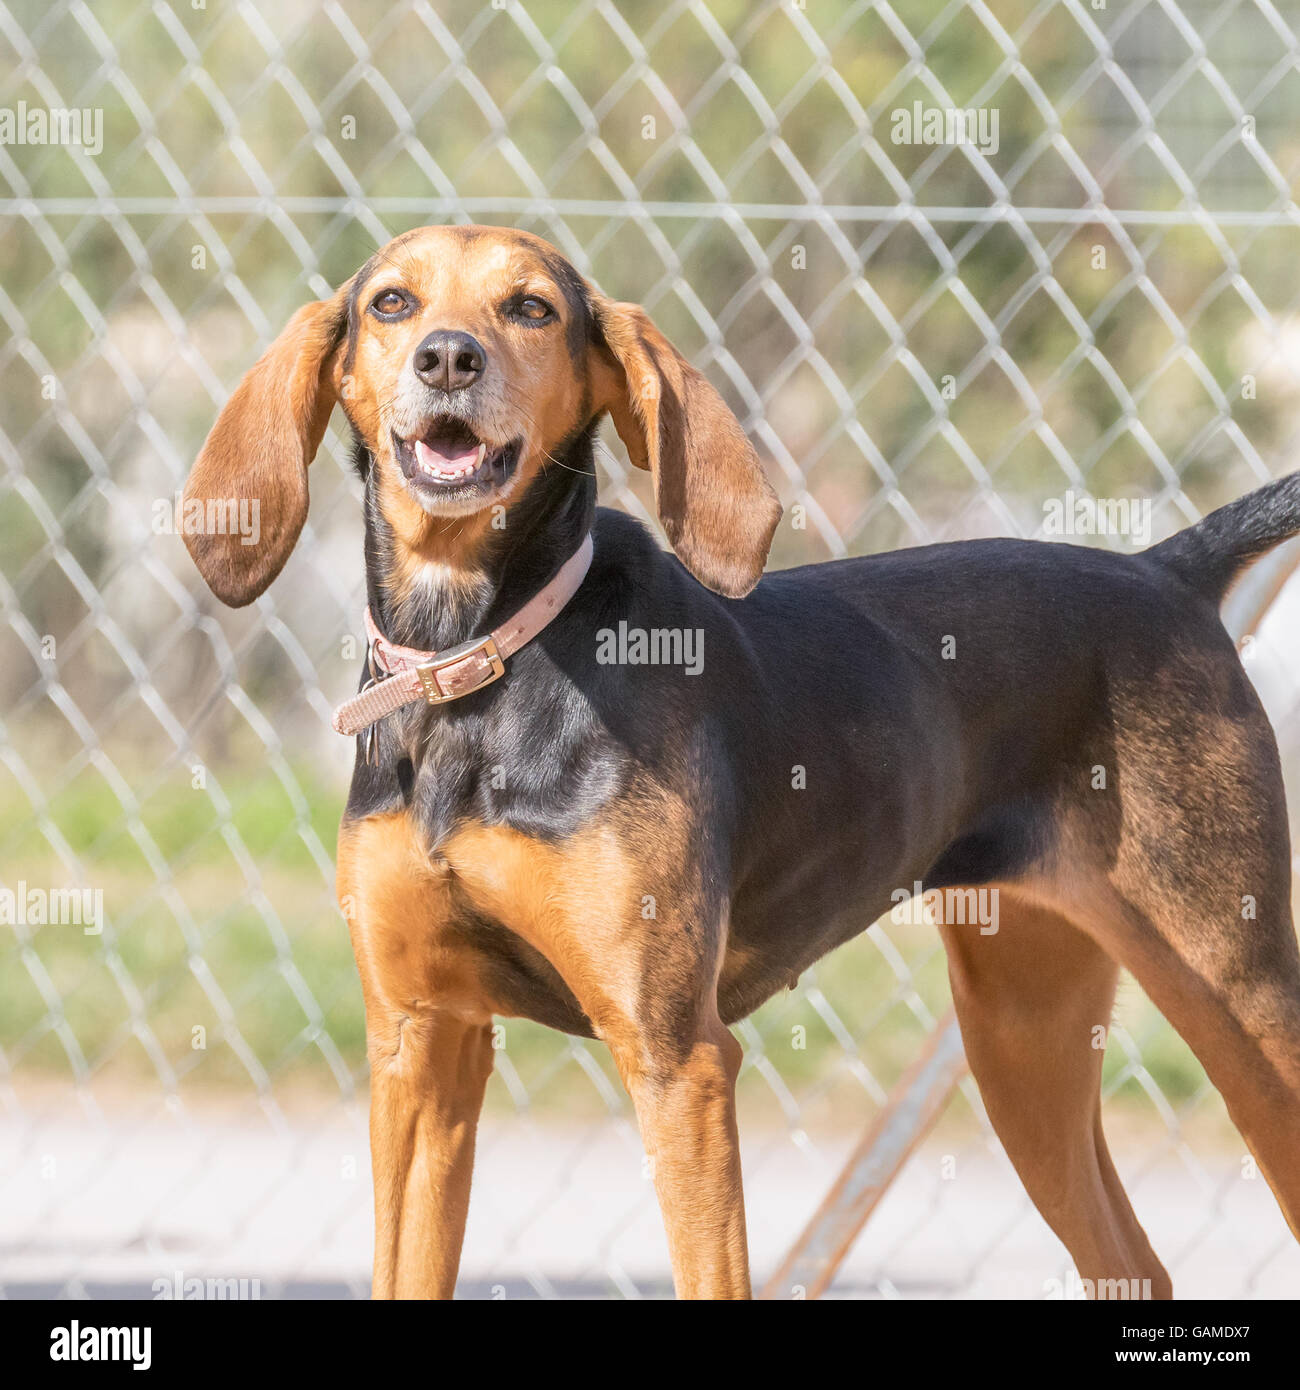 Female hunt dog portrait at a park. Stock Photo